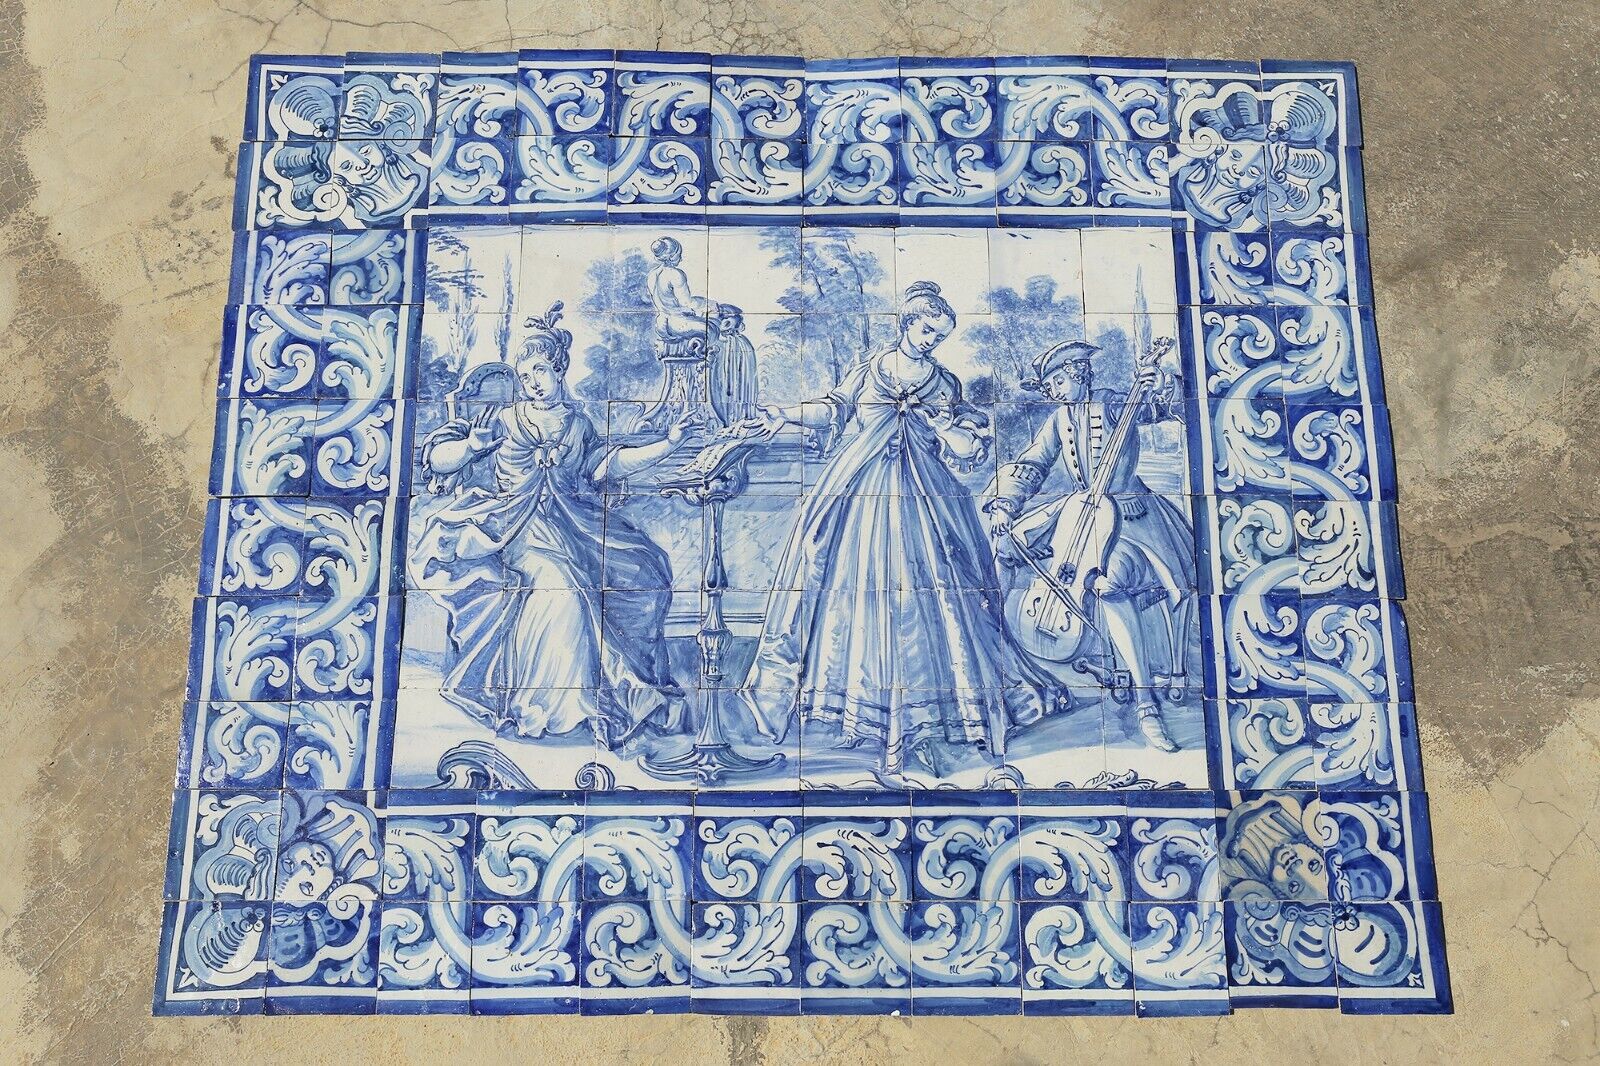 18th Century Antique Portuguese Tile Mural Panel depicting a Musical Scene